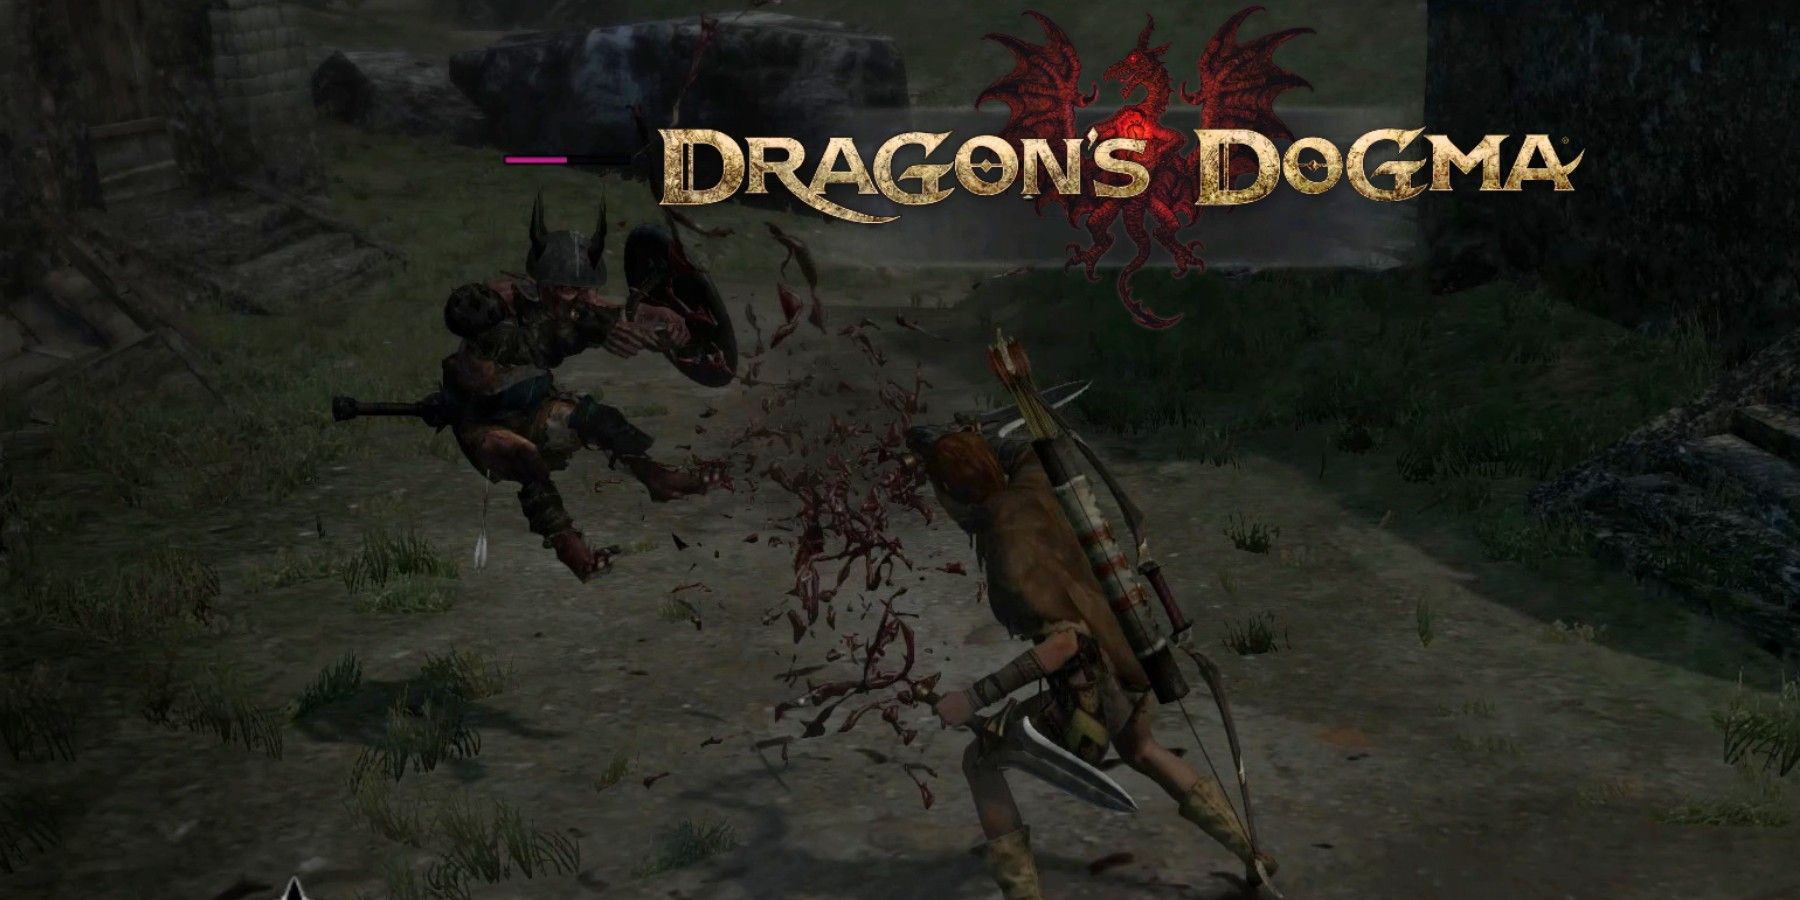 dragons dogma logo and kill